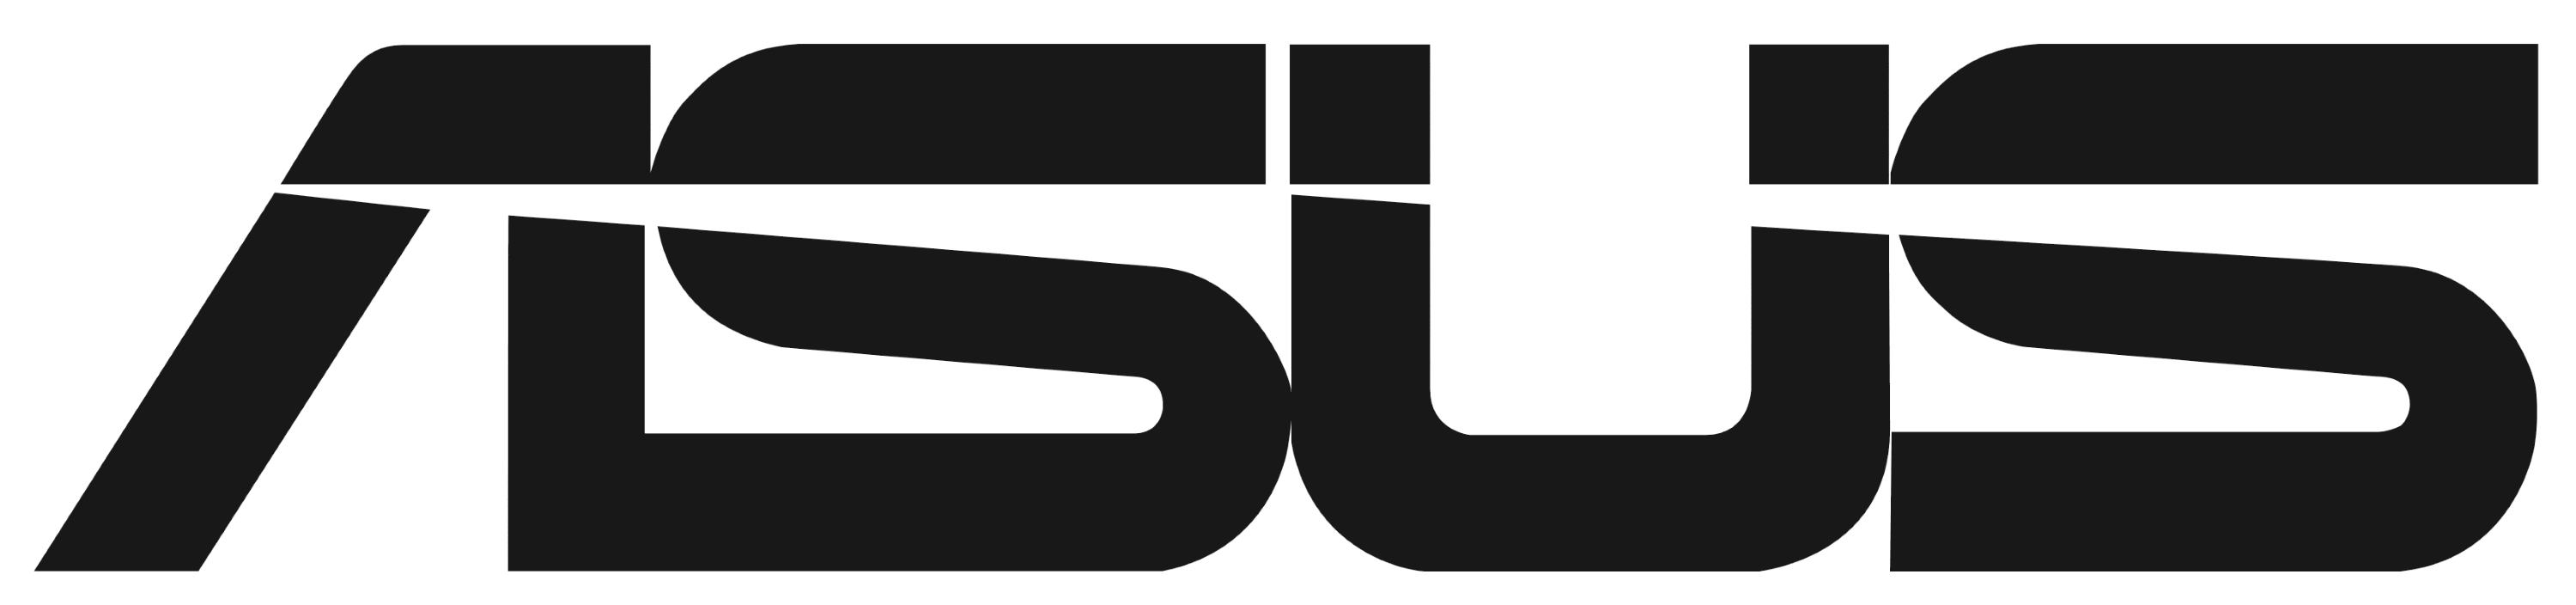 Asus Logo png download - 500*544 - Free Transparent Gamer png